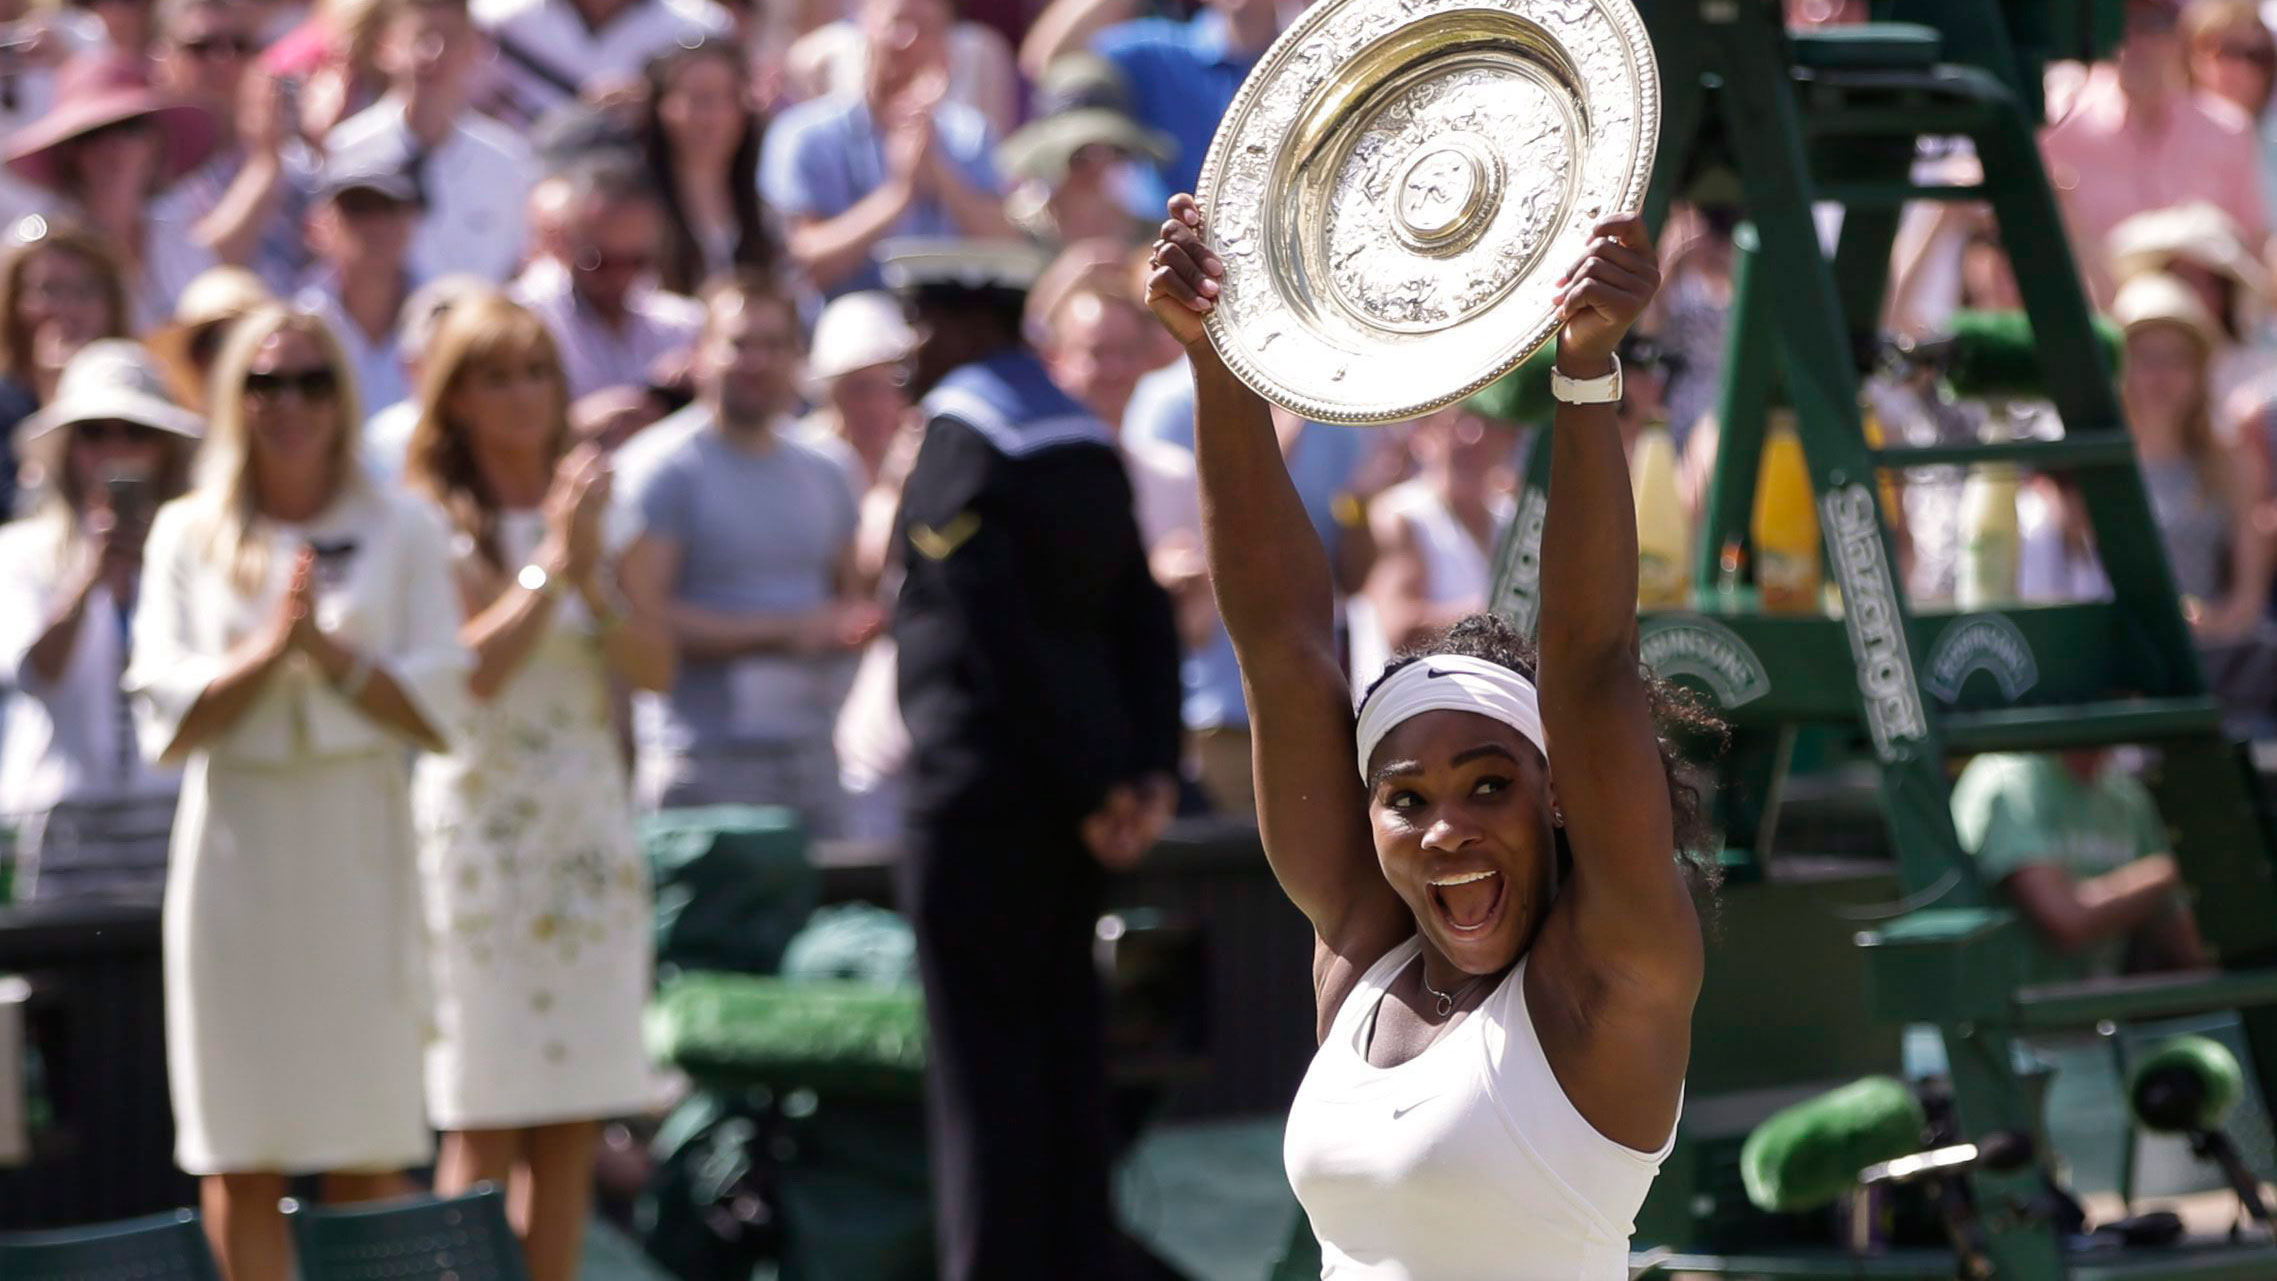 Tennis;-Serena-Williams